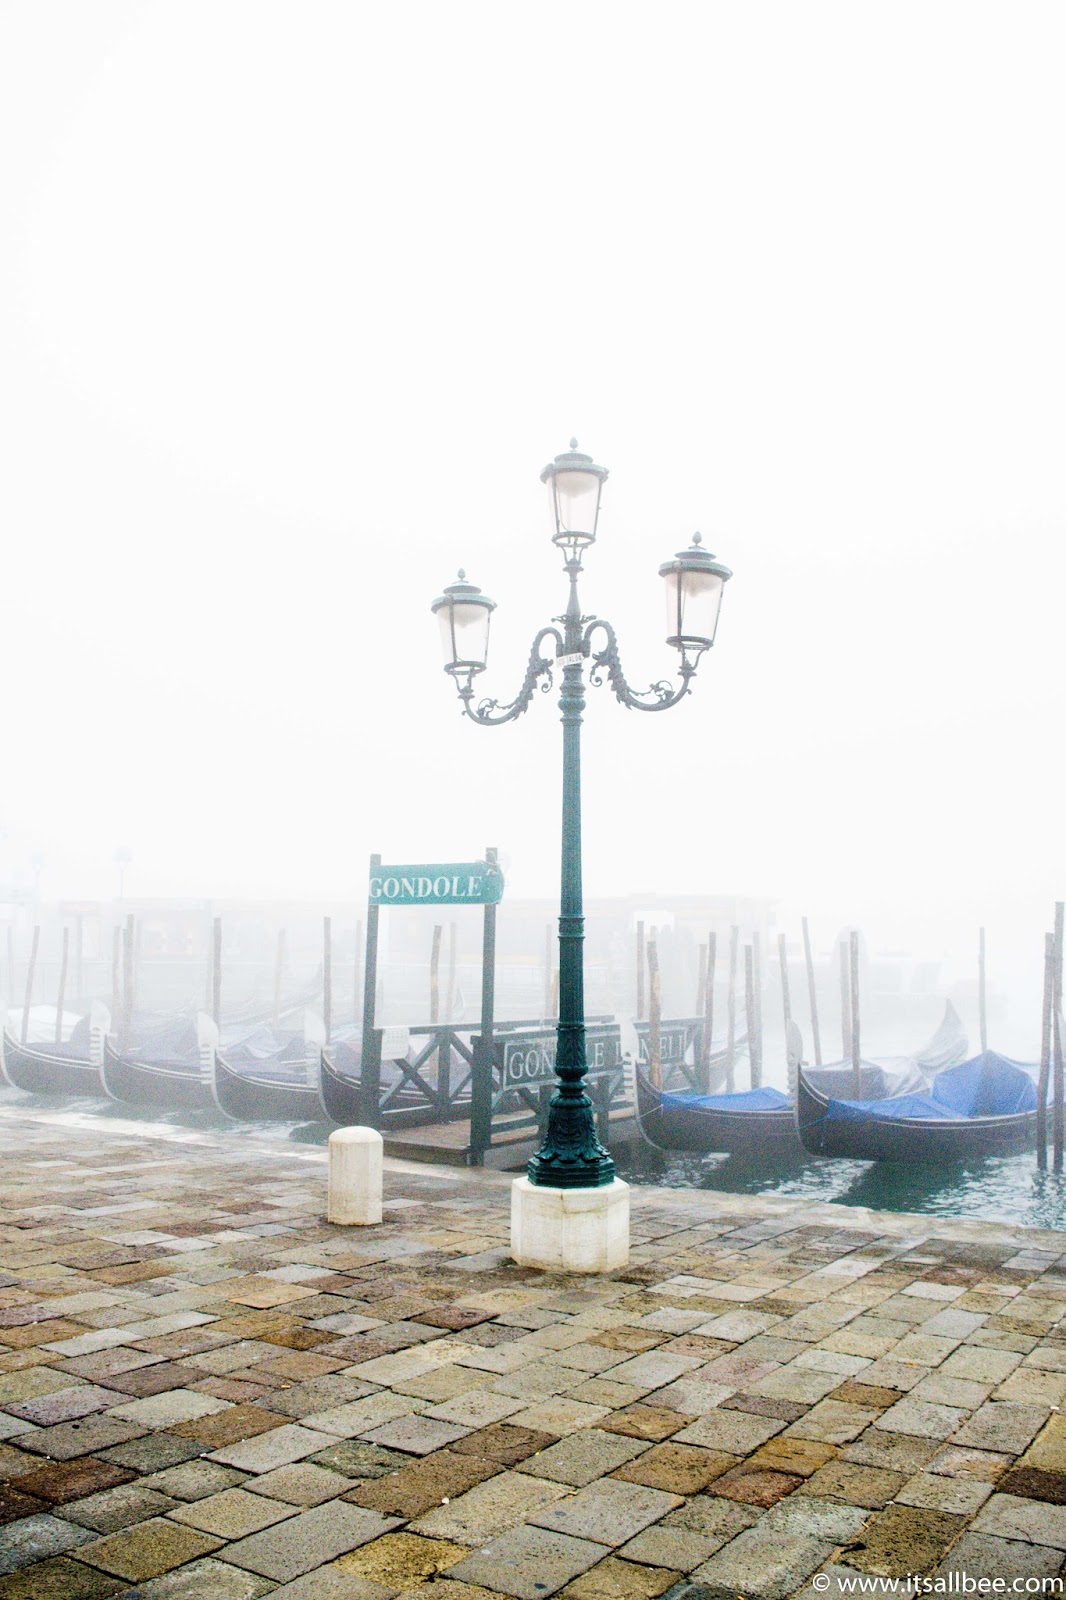 Venice Fog